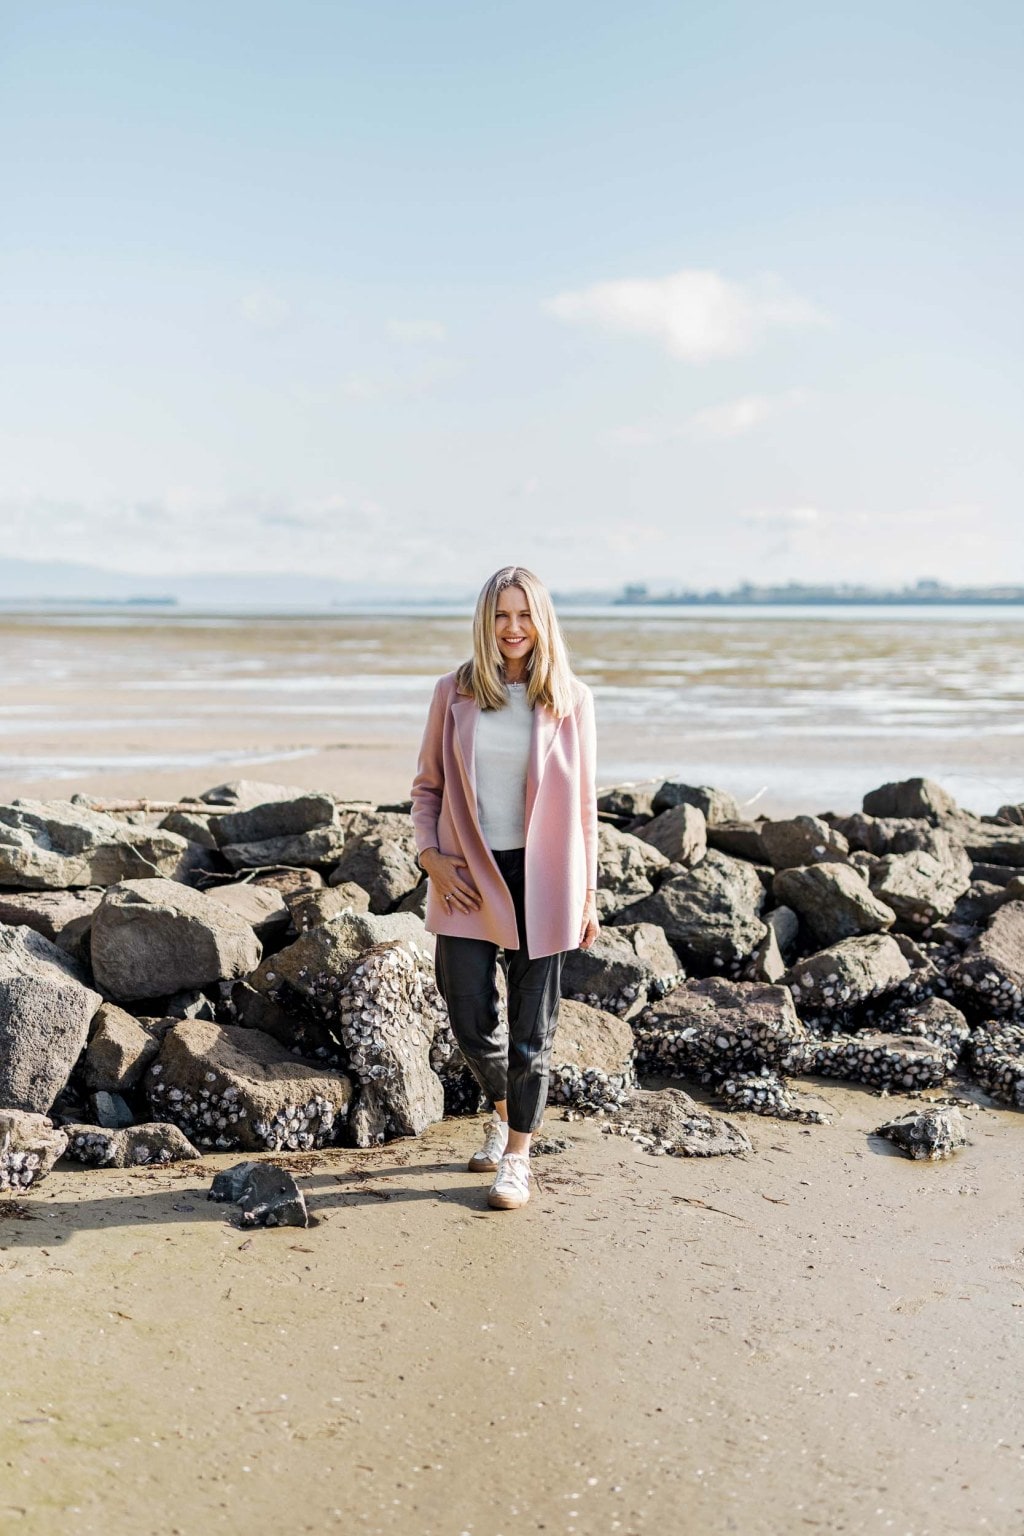 Sharon Hunter standing on a rocky beach